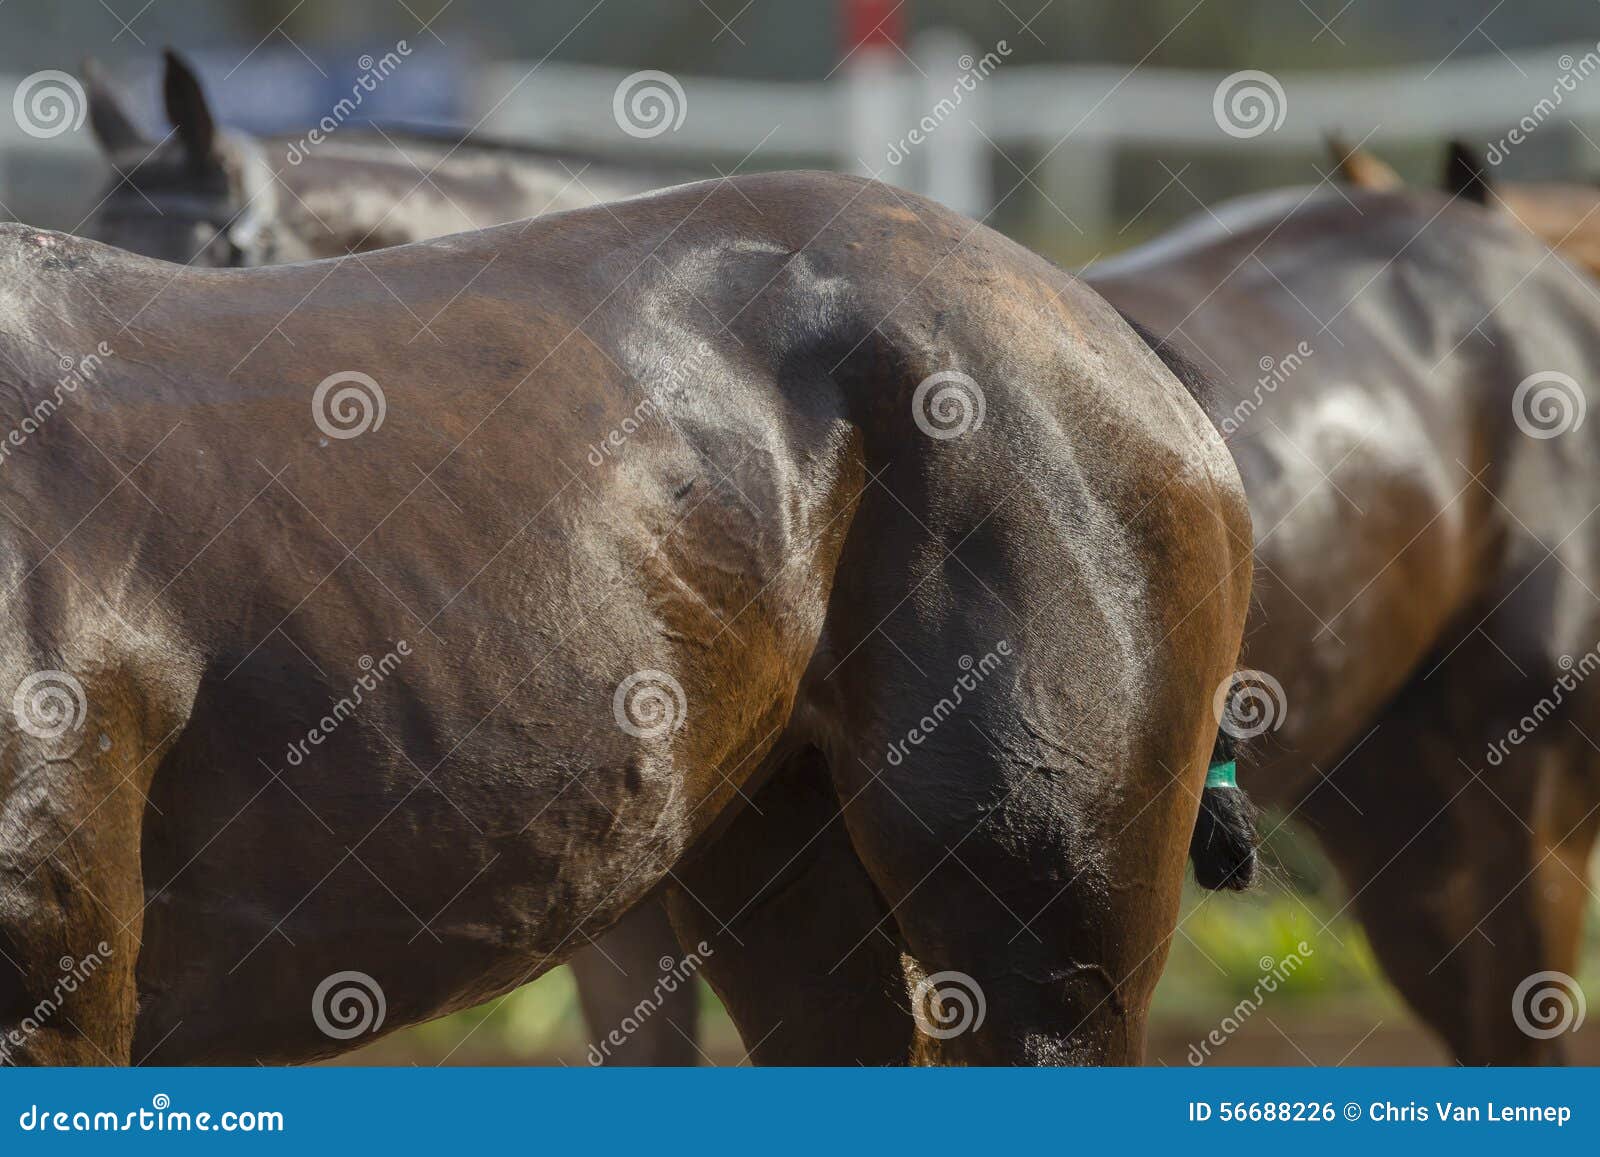 horses bodies